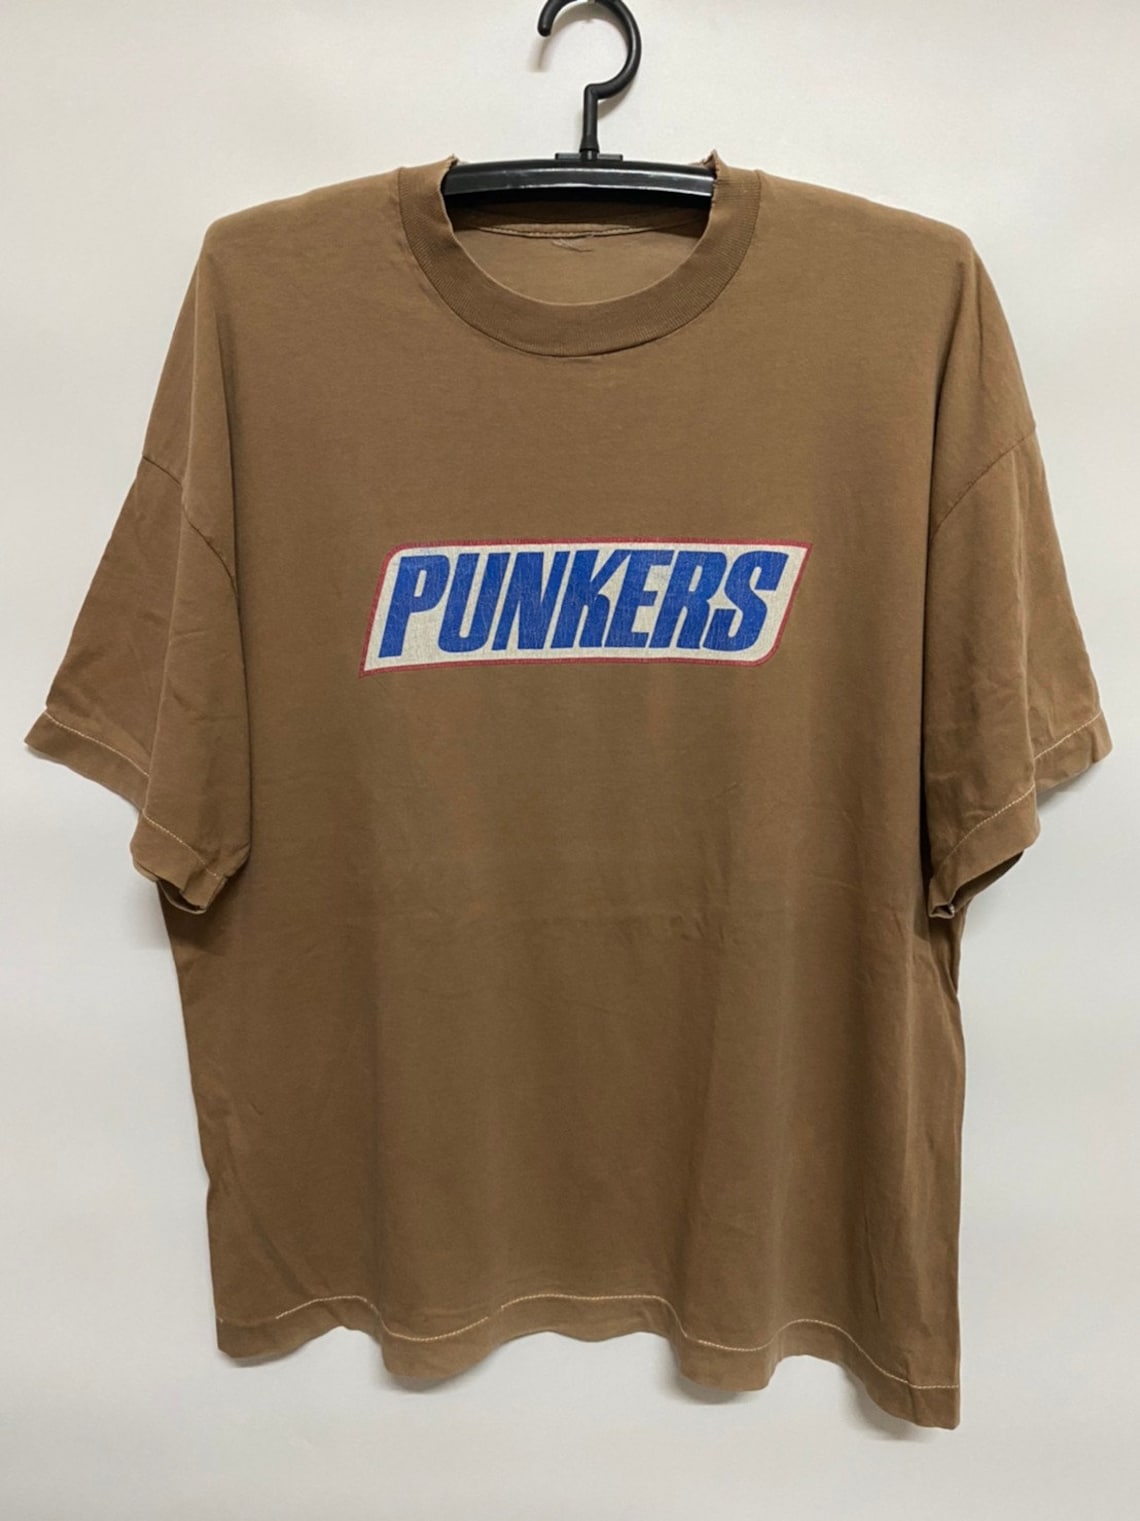 Vintage 90s NOFX Punkers T-shirt | Etsy